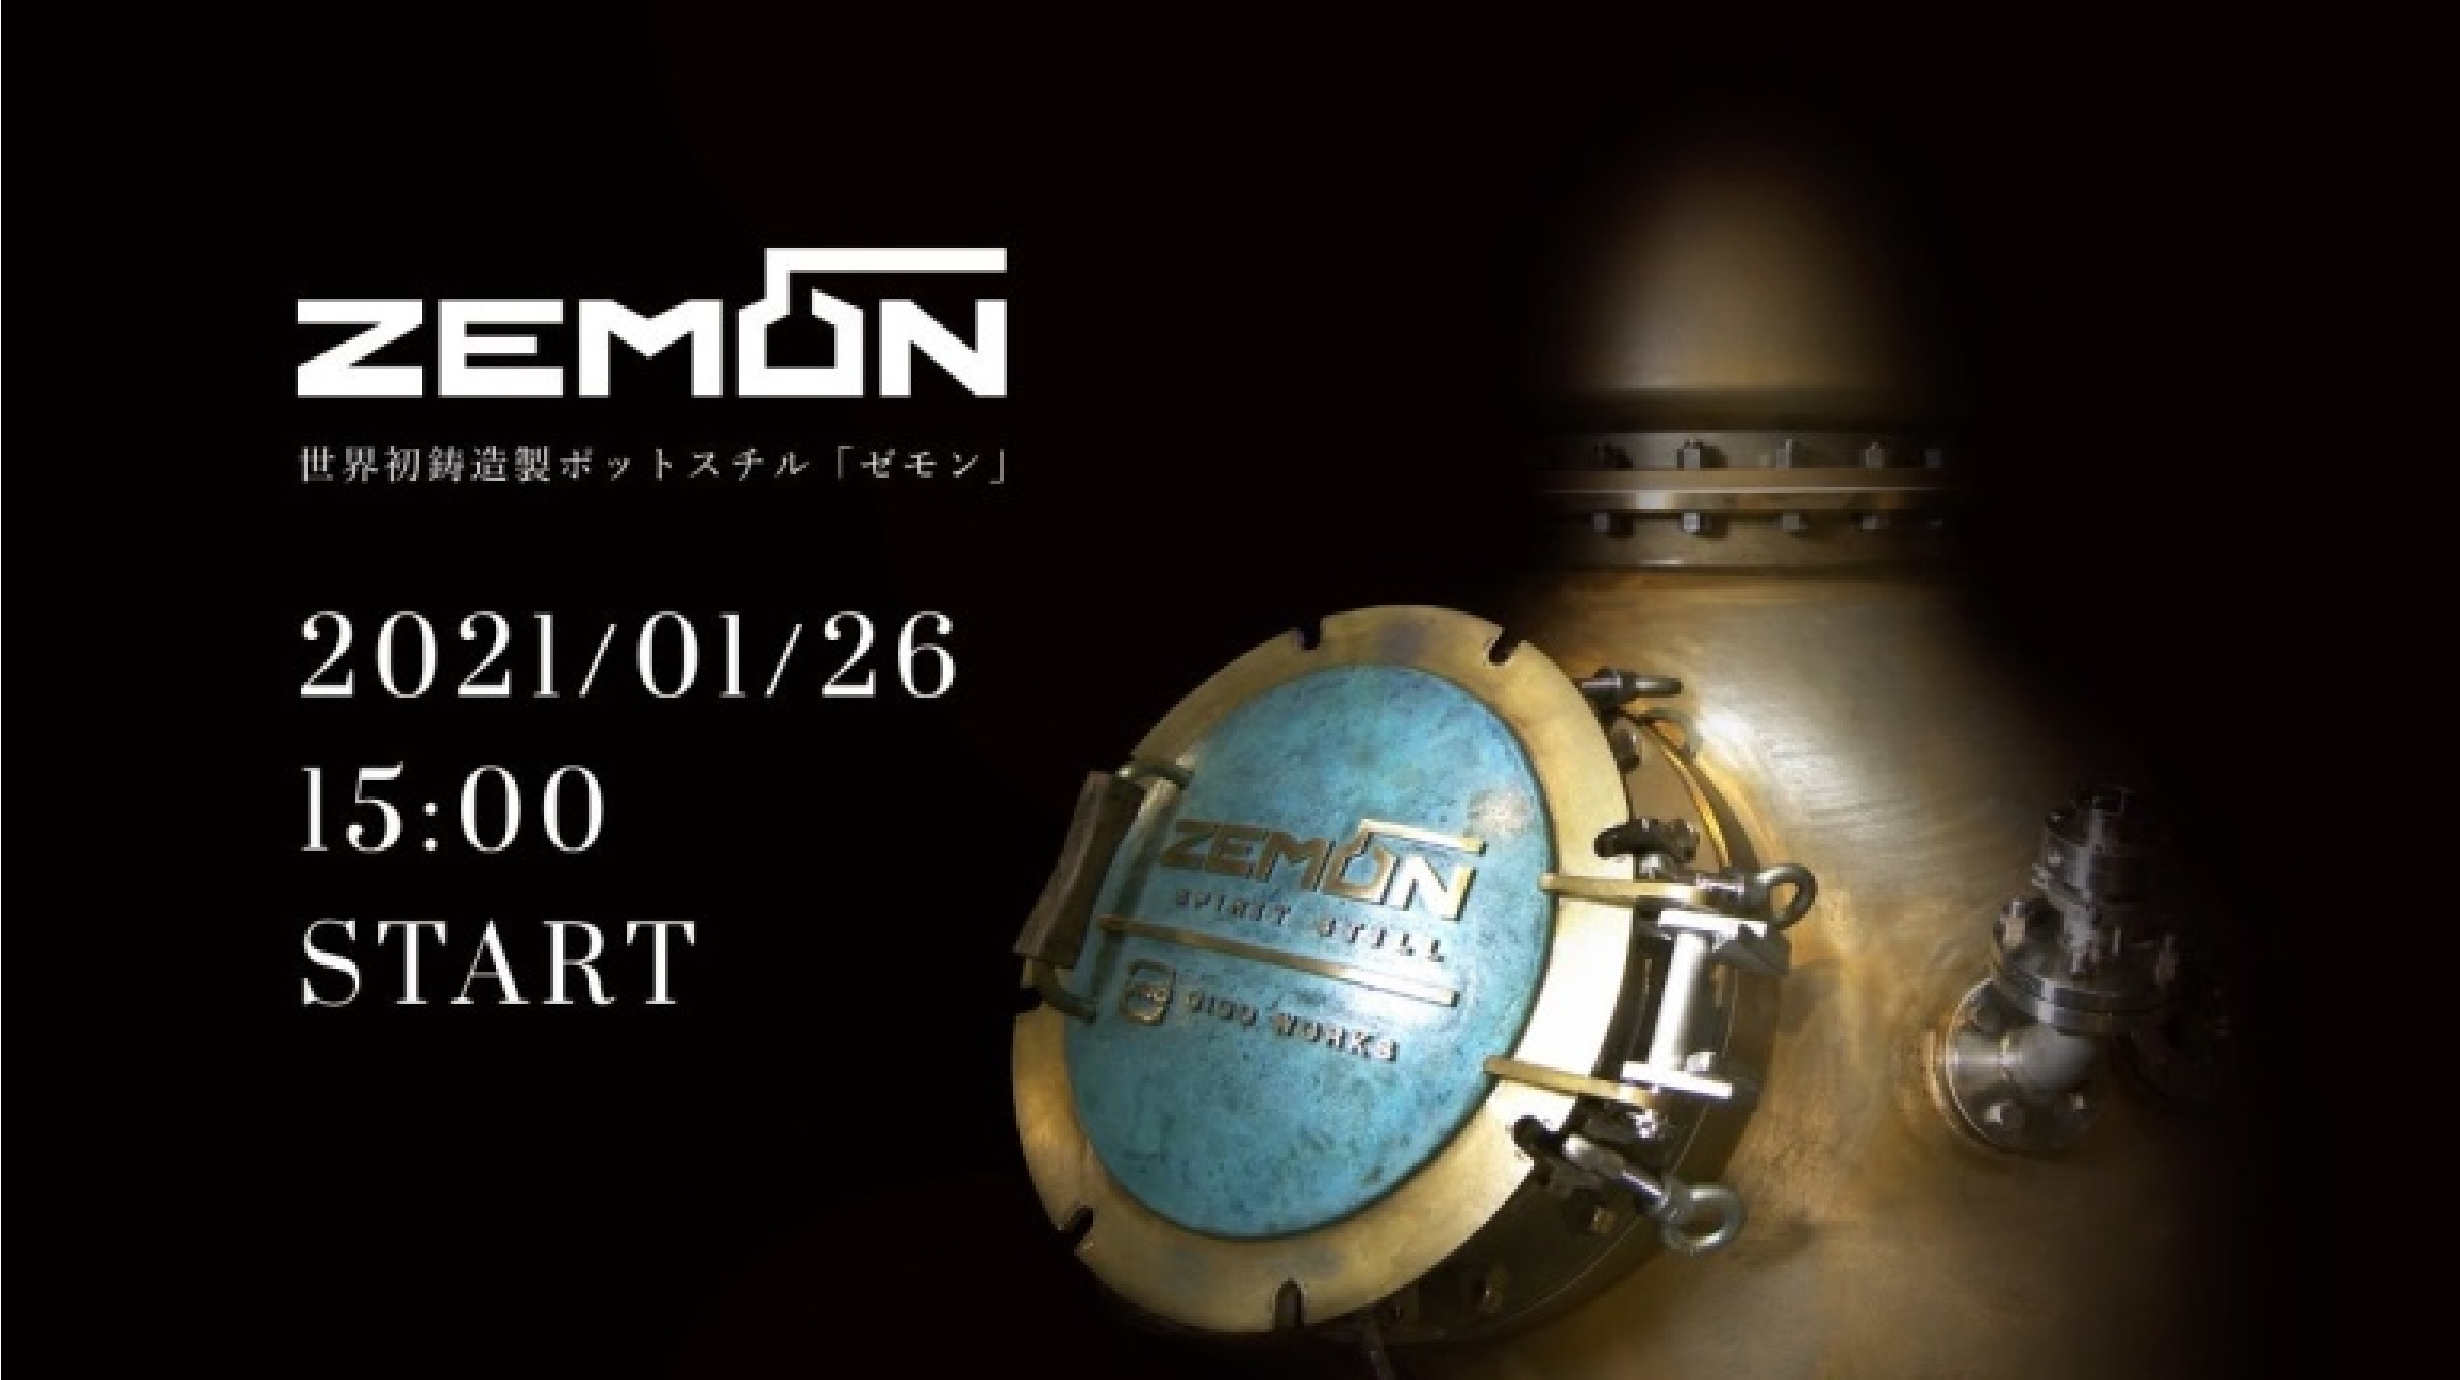 「ZEMON」公式ホームページ